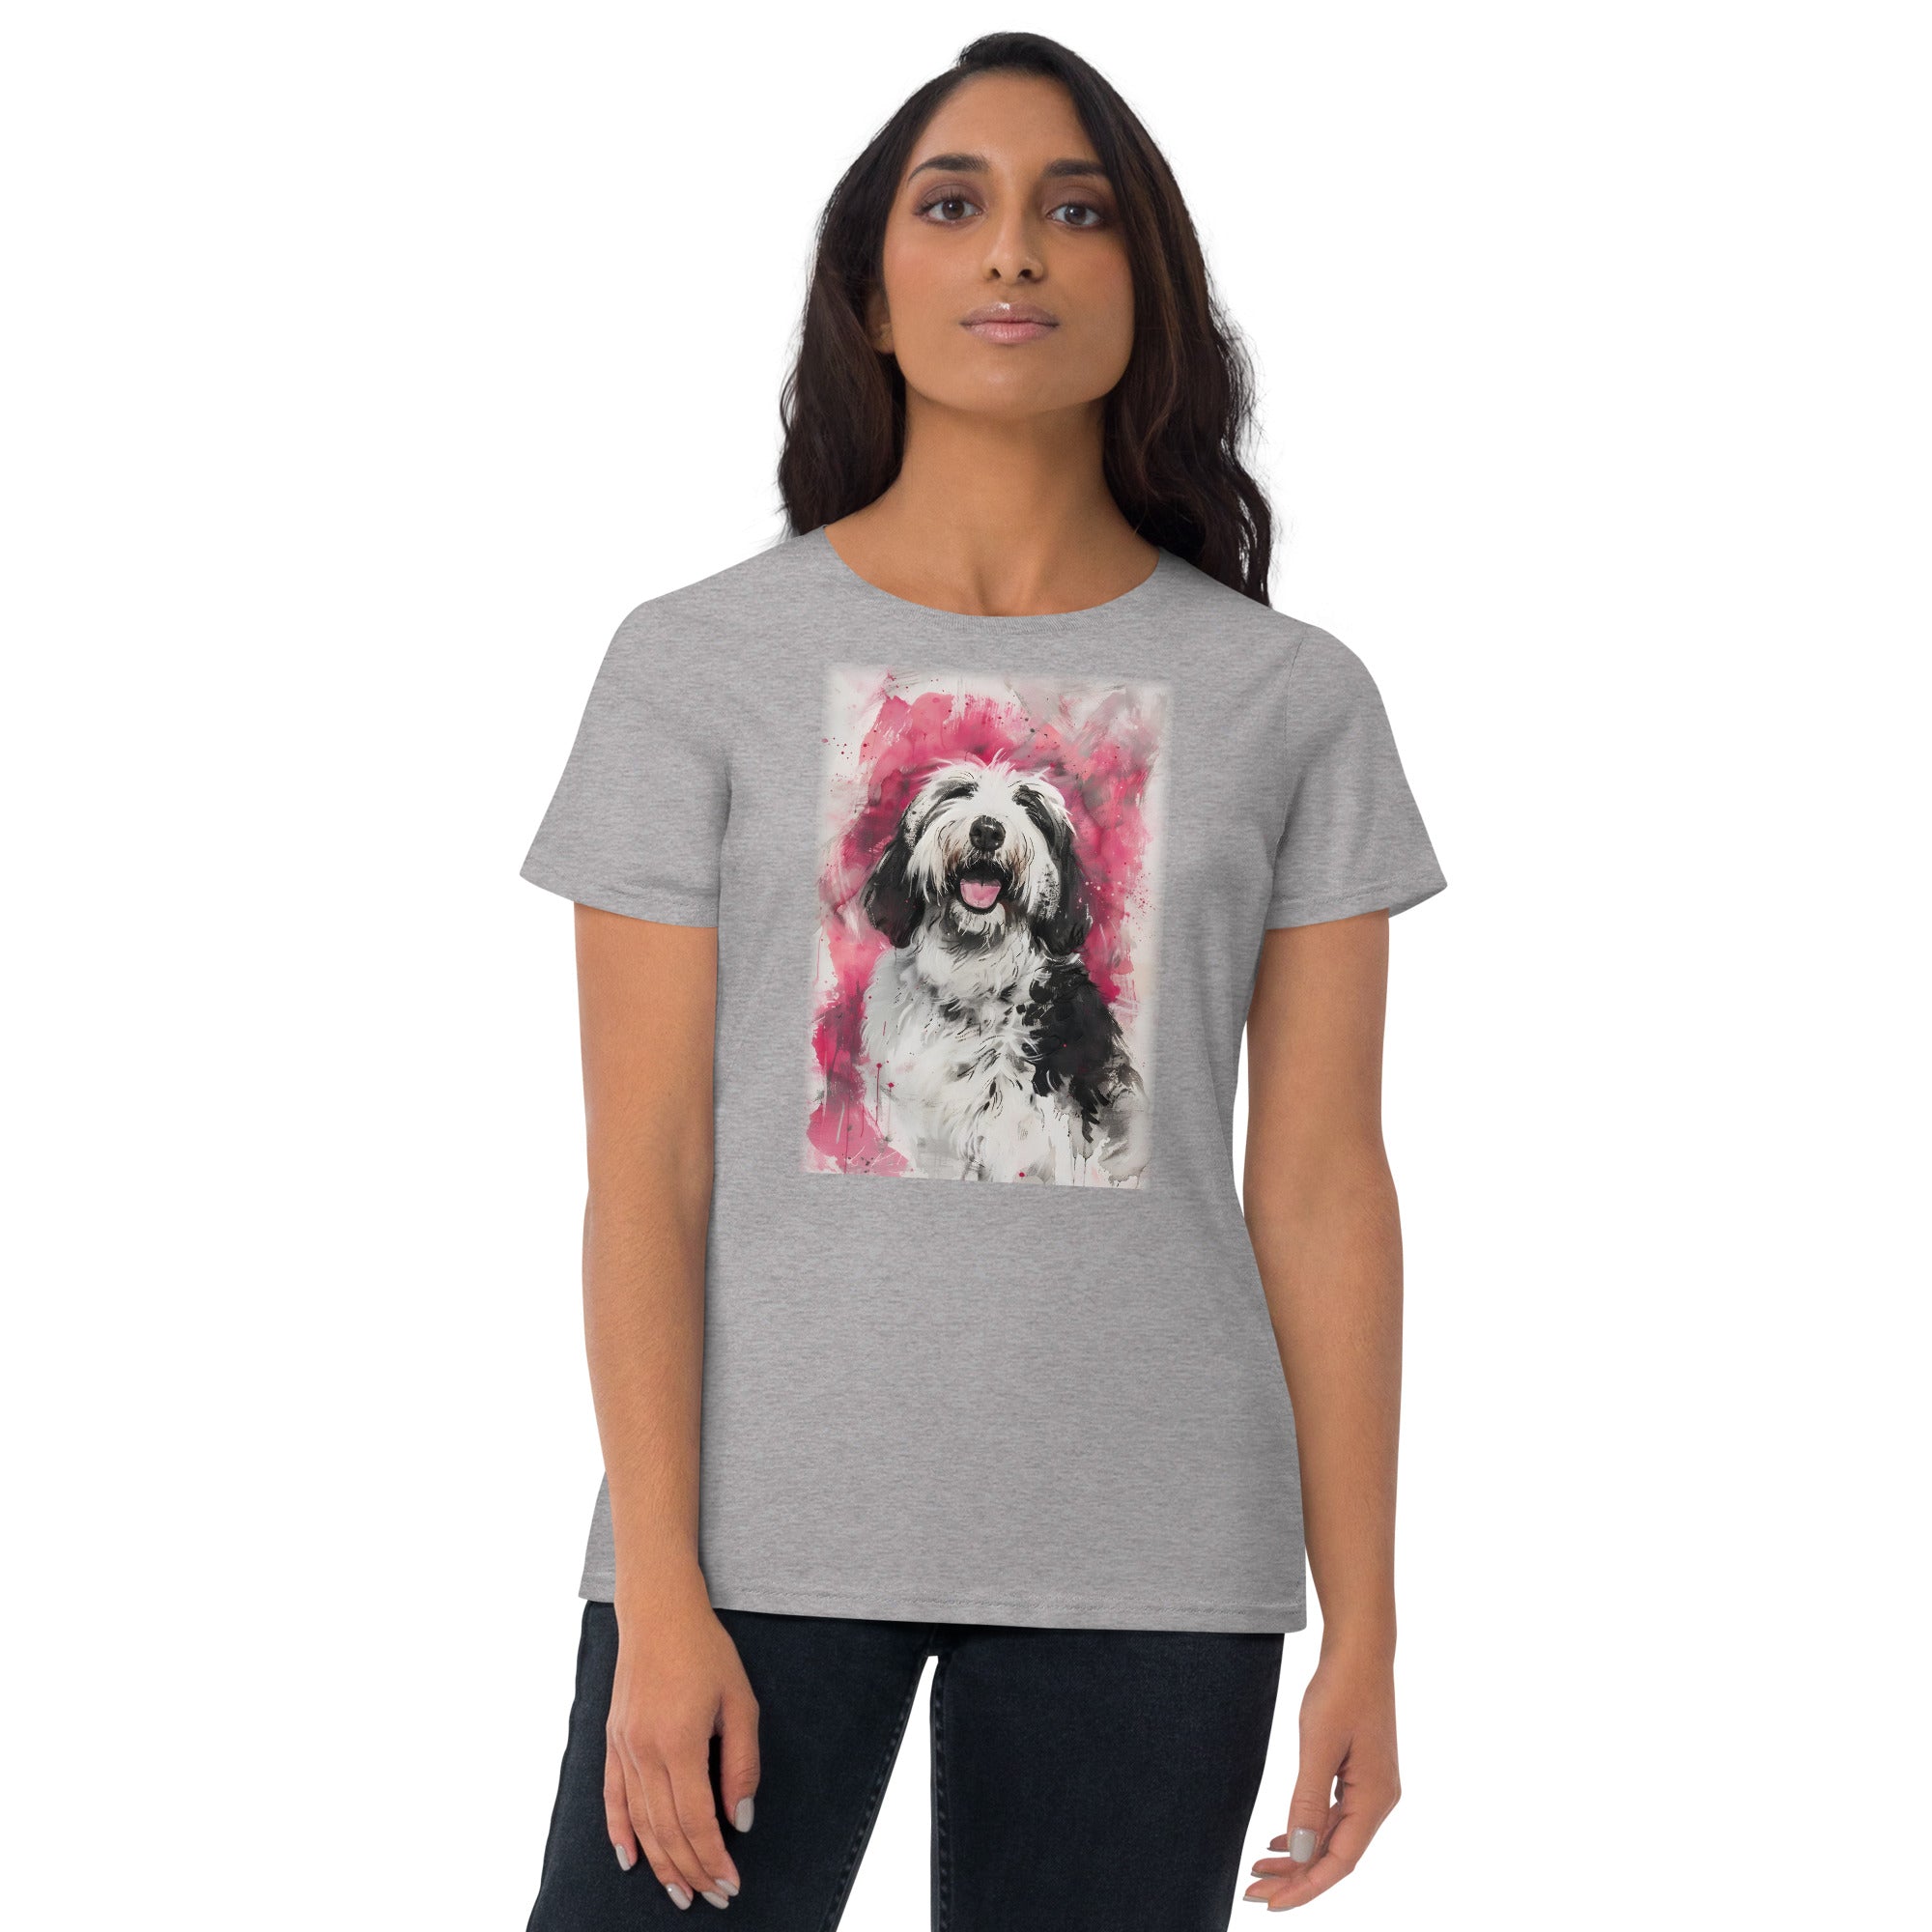 Old English Sheepdog Women's short sleeve t-shirt